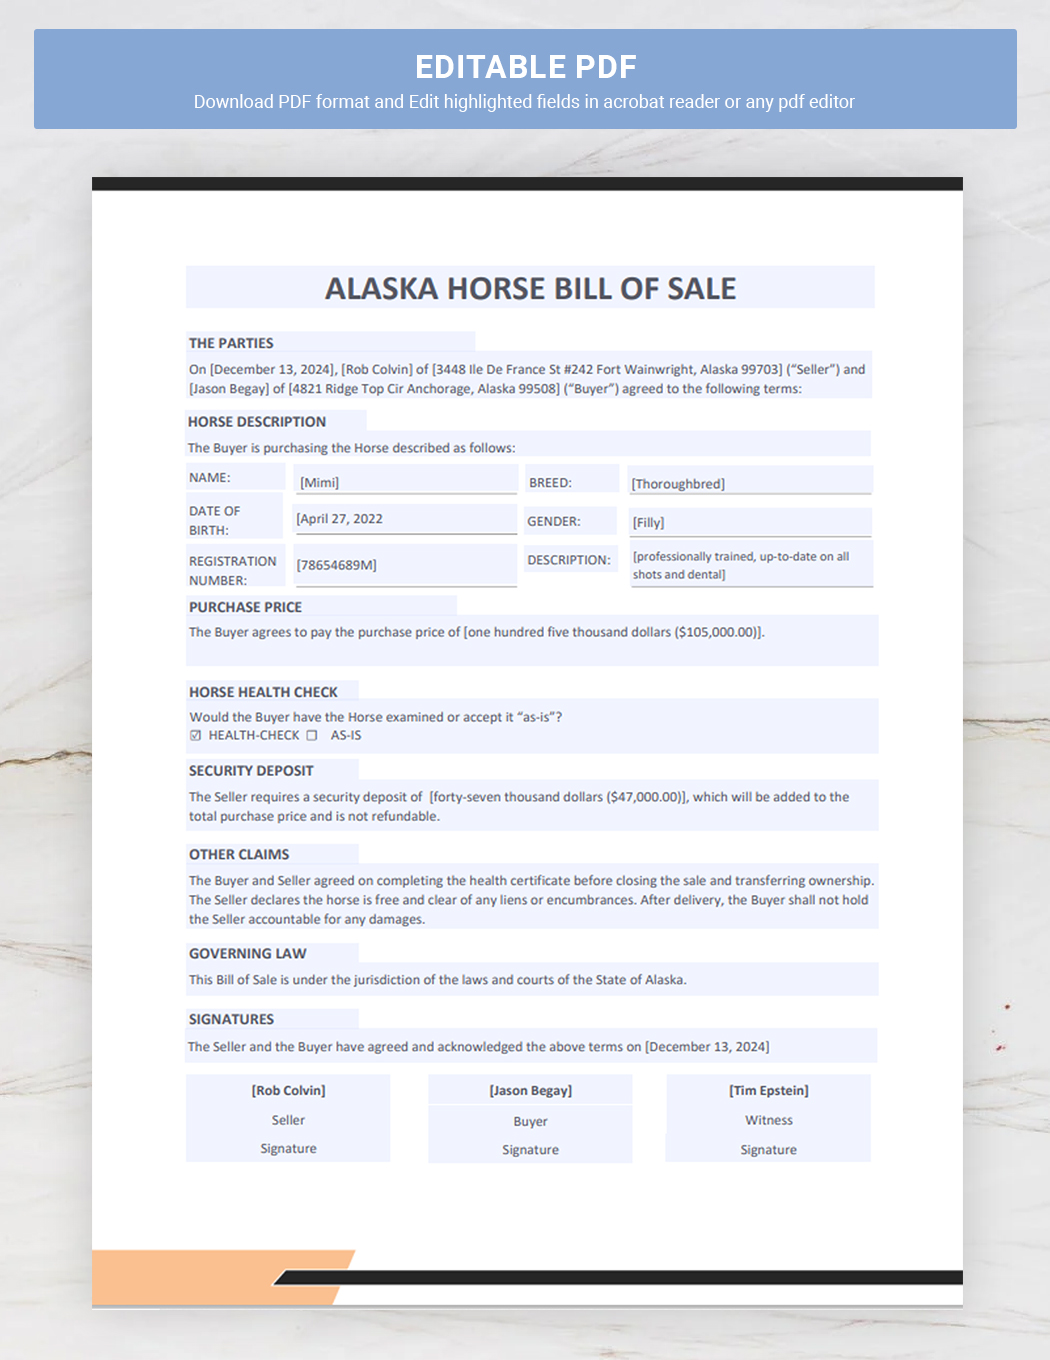 Alaska Horse Bill of Sale Template